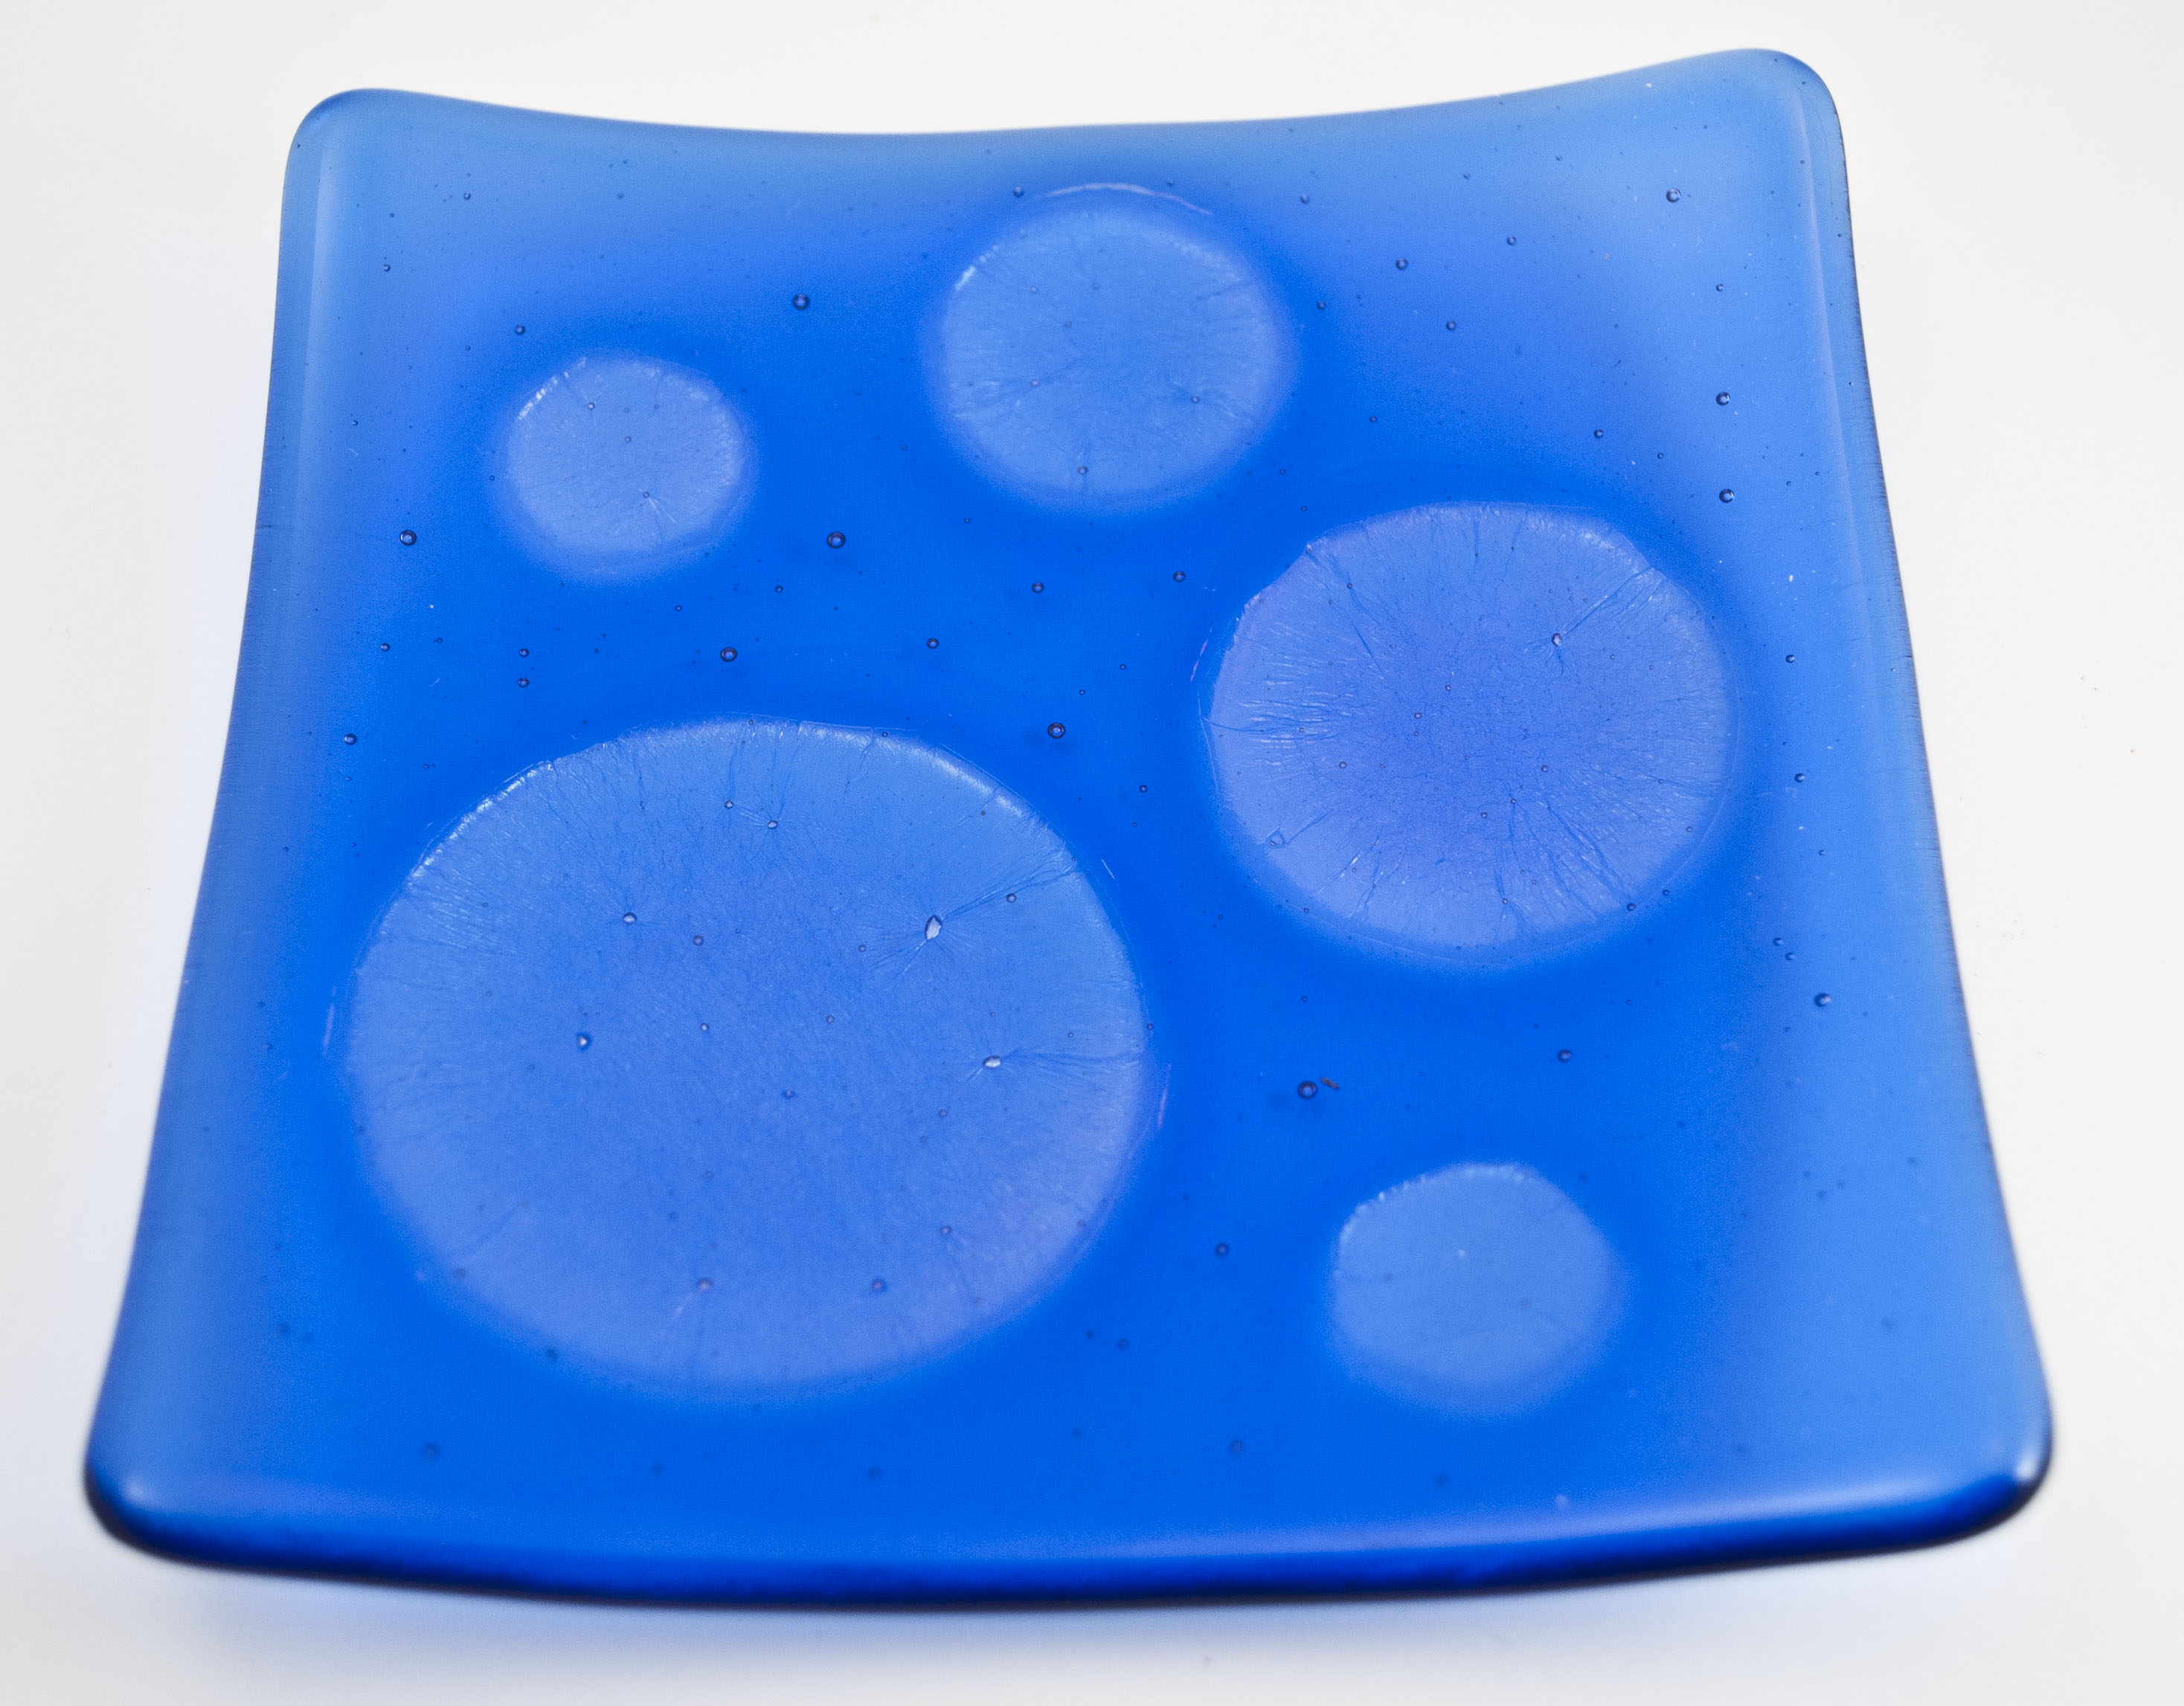 Blue dish with clear irid circles